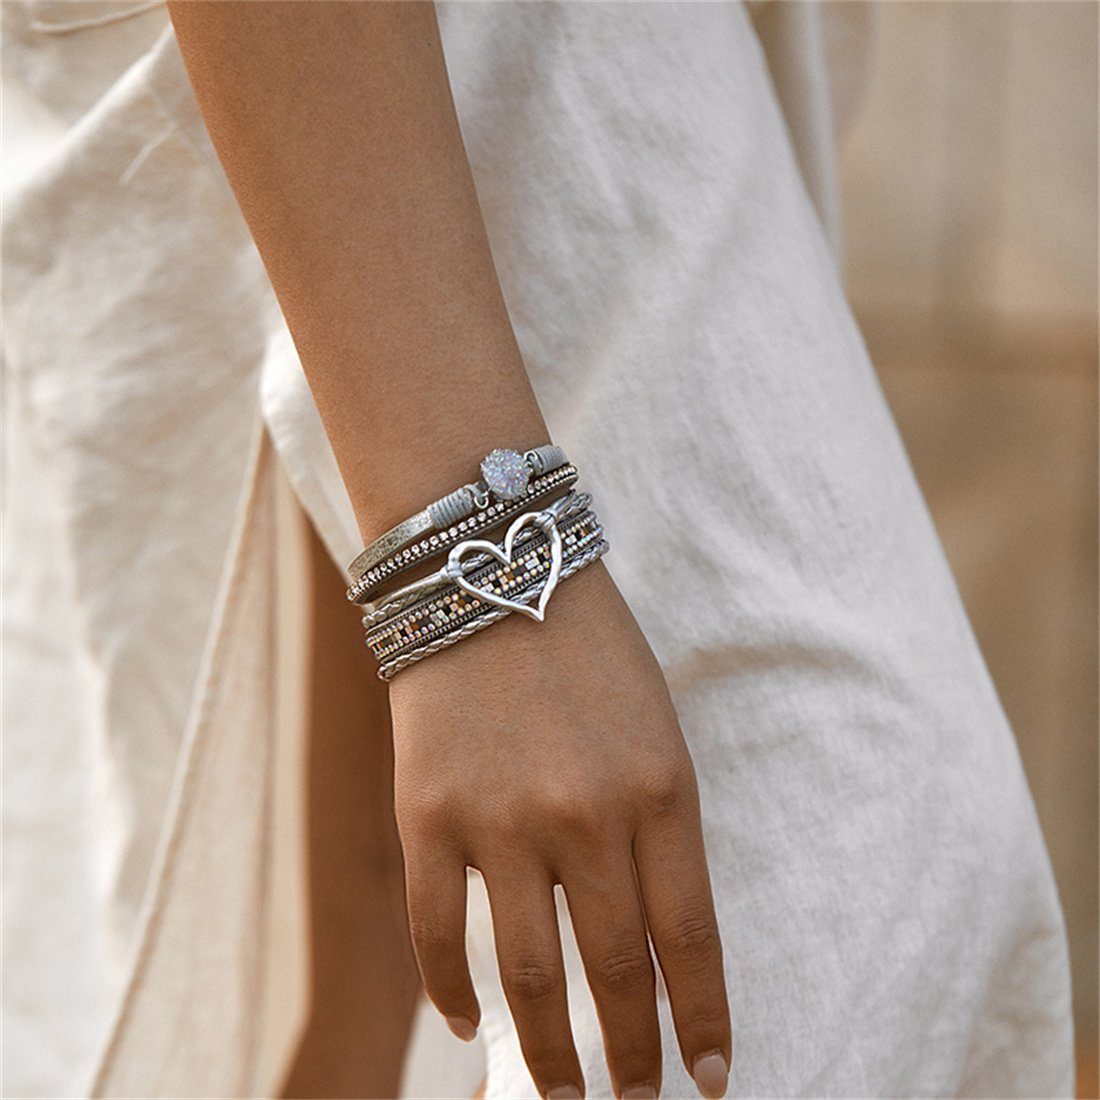 Armband Liebe Silber DÖRÖY Magnetverschluss Armband Schmuck Lederarmband Bohème mehrlagiges mit